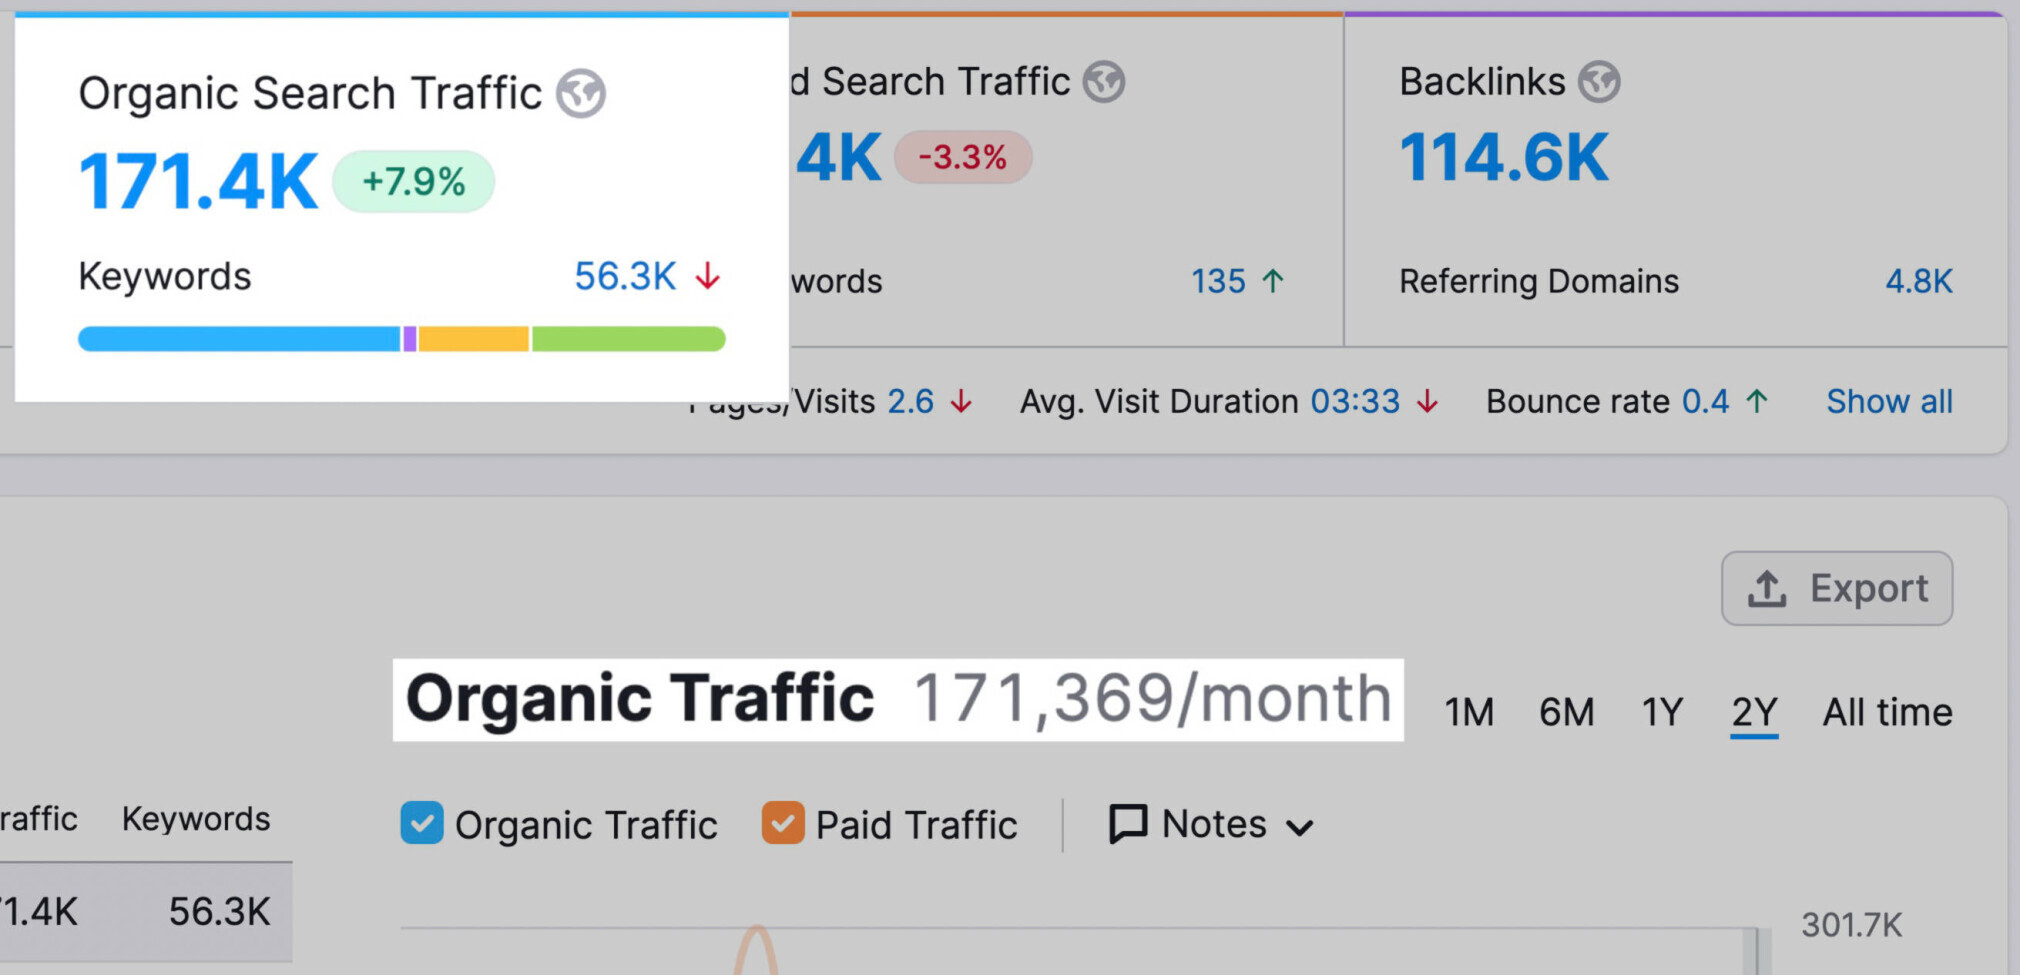 organic search traffic per month